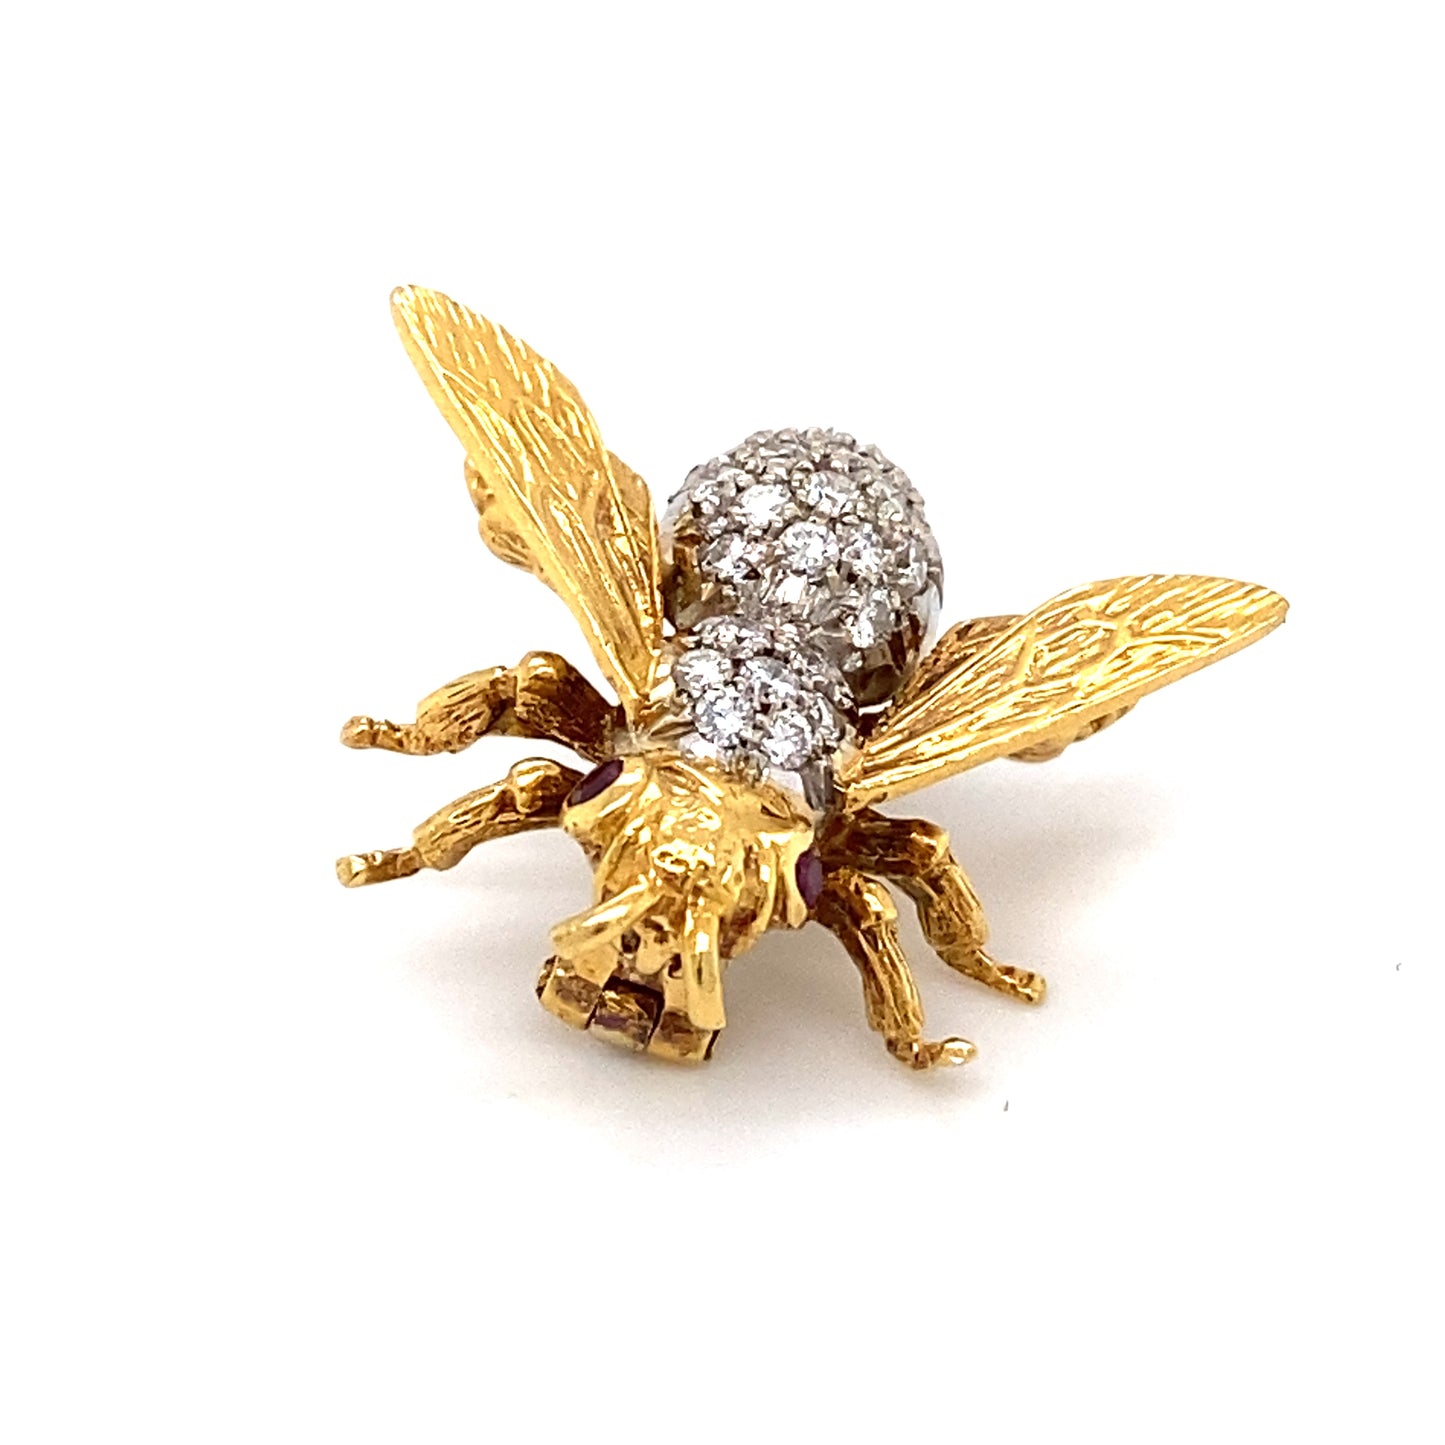 Circa 1960s Diamond and Ruby Bee Pin in 18K Gold